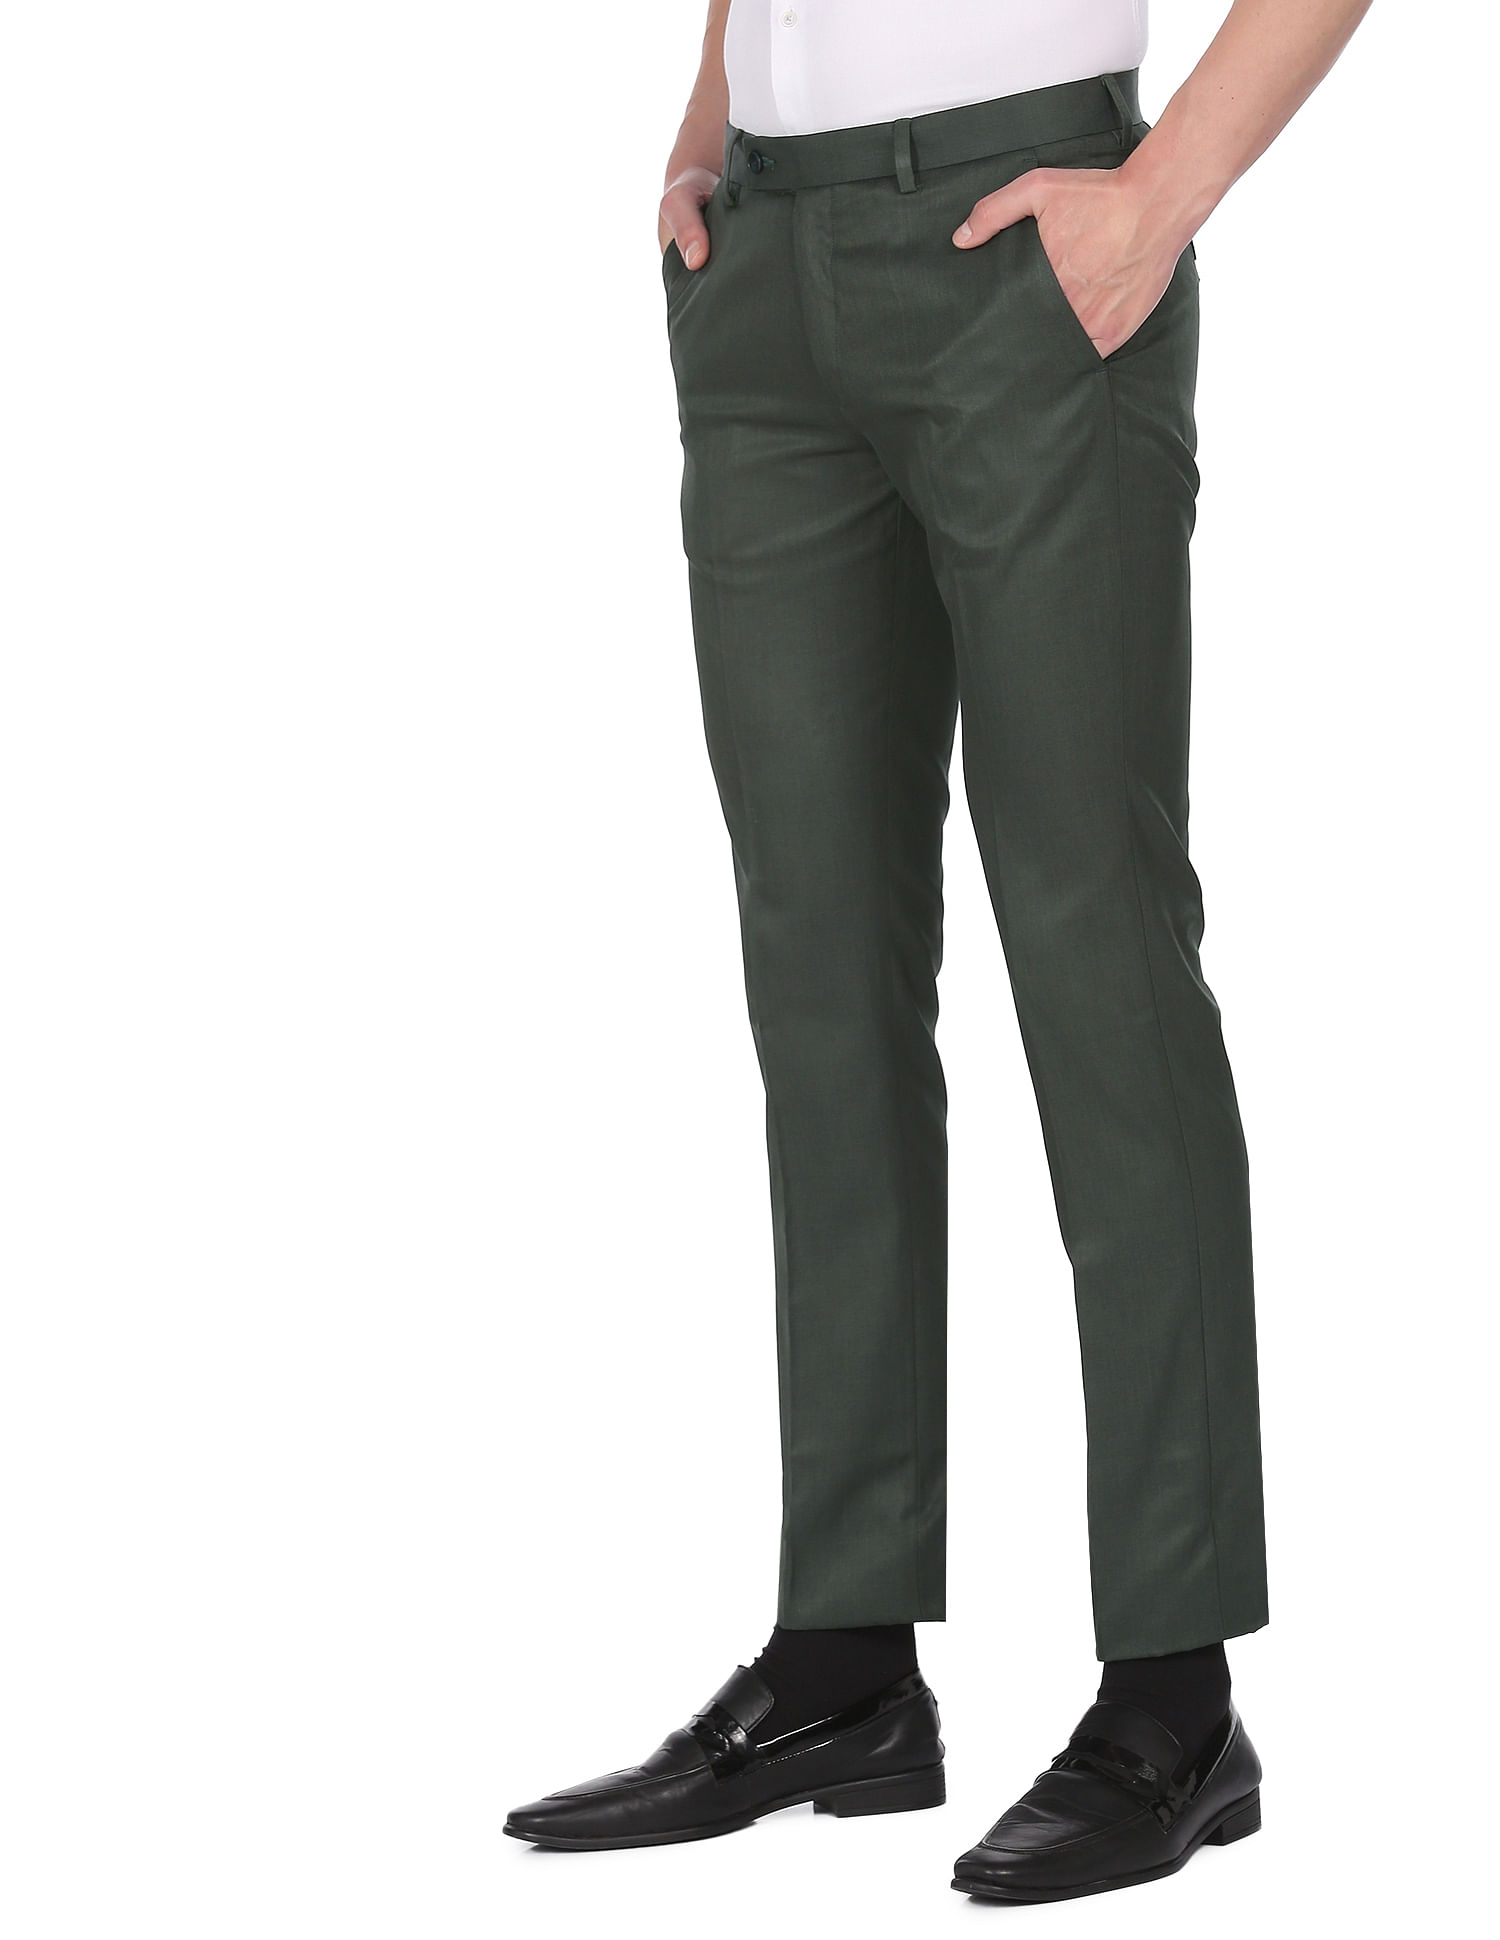 Italian Suit Pants  Copper Trousers  Copper Pants  Style Pants Trousers  Light High  Aliexpress